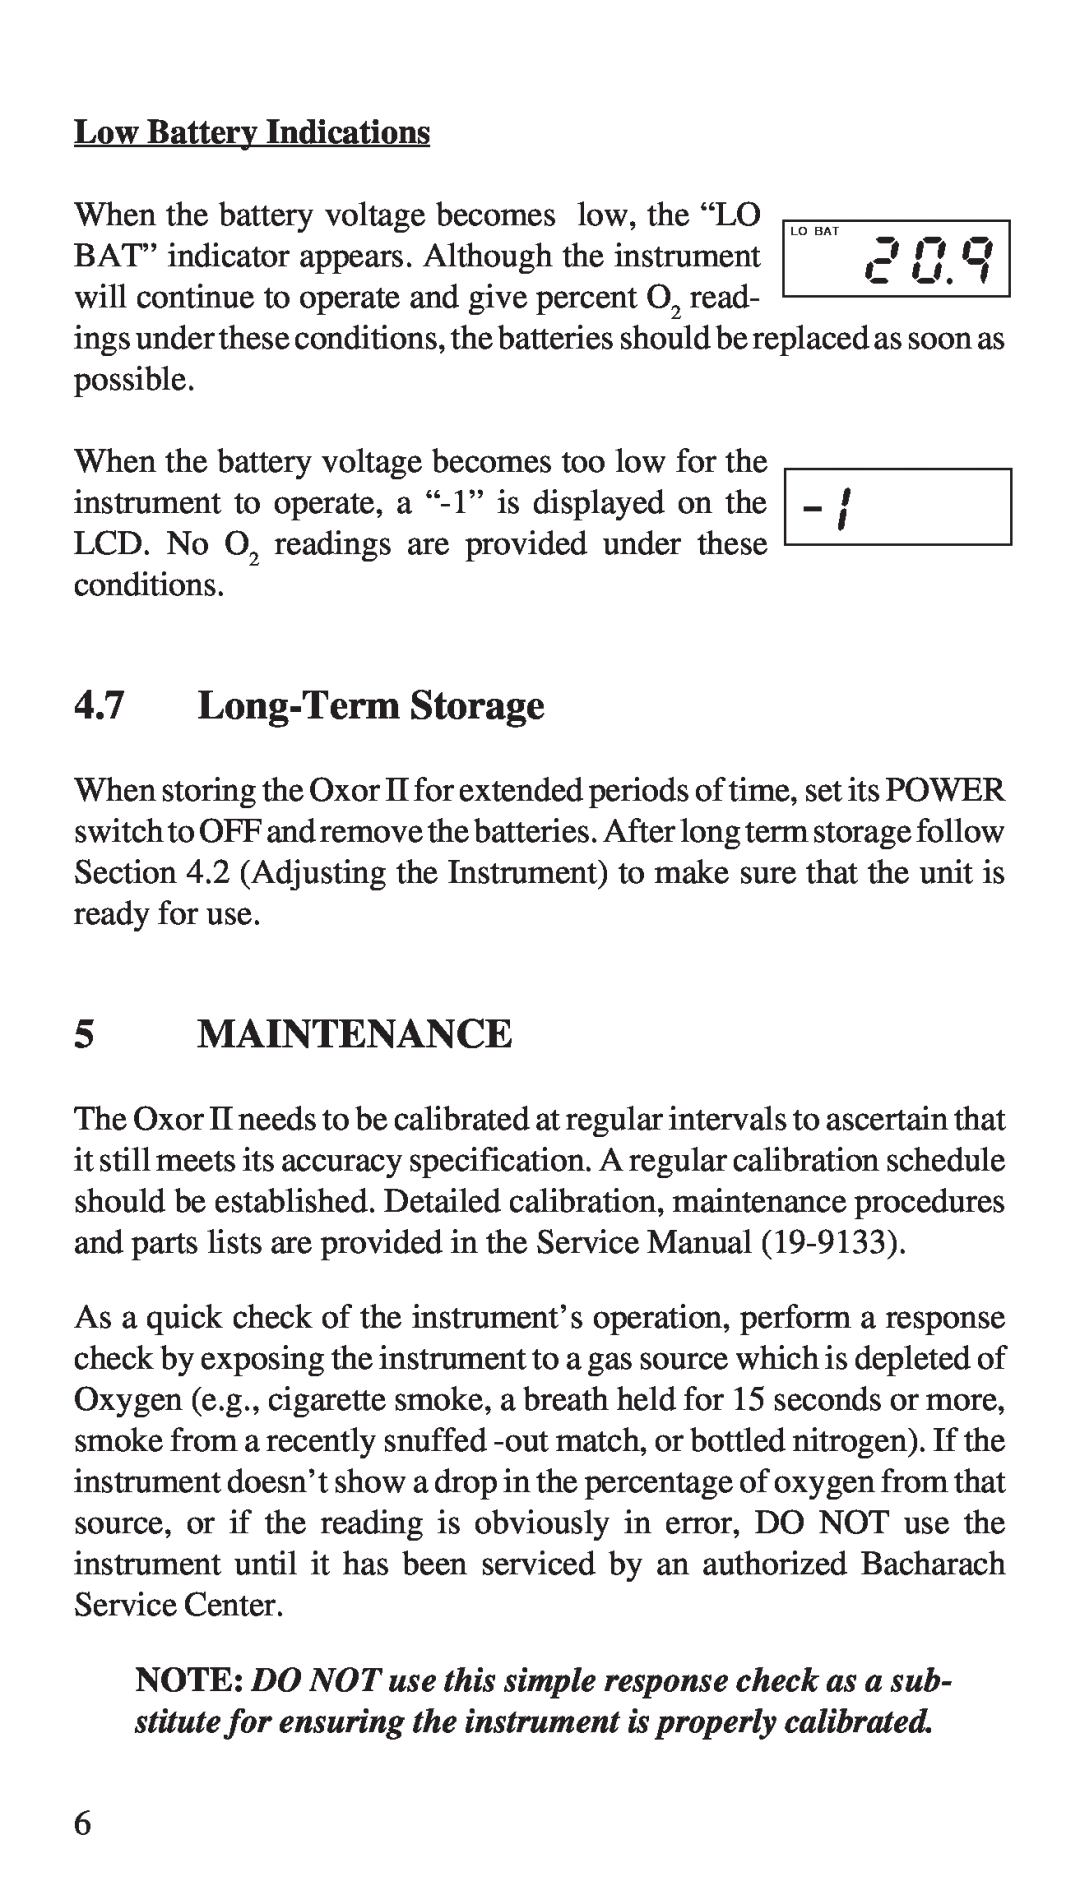 Bacharach 19-7037, 19-7044 manual Long-Term Storage, Maintenance, Low Battery Indications 